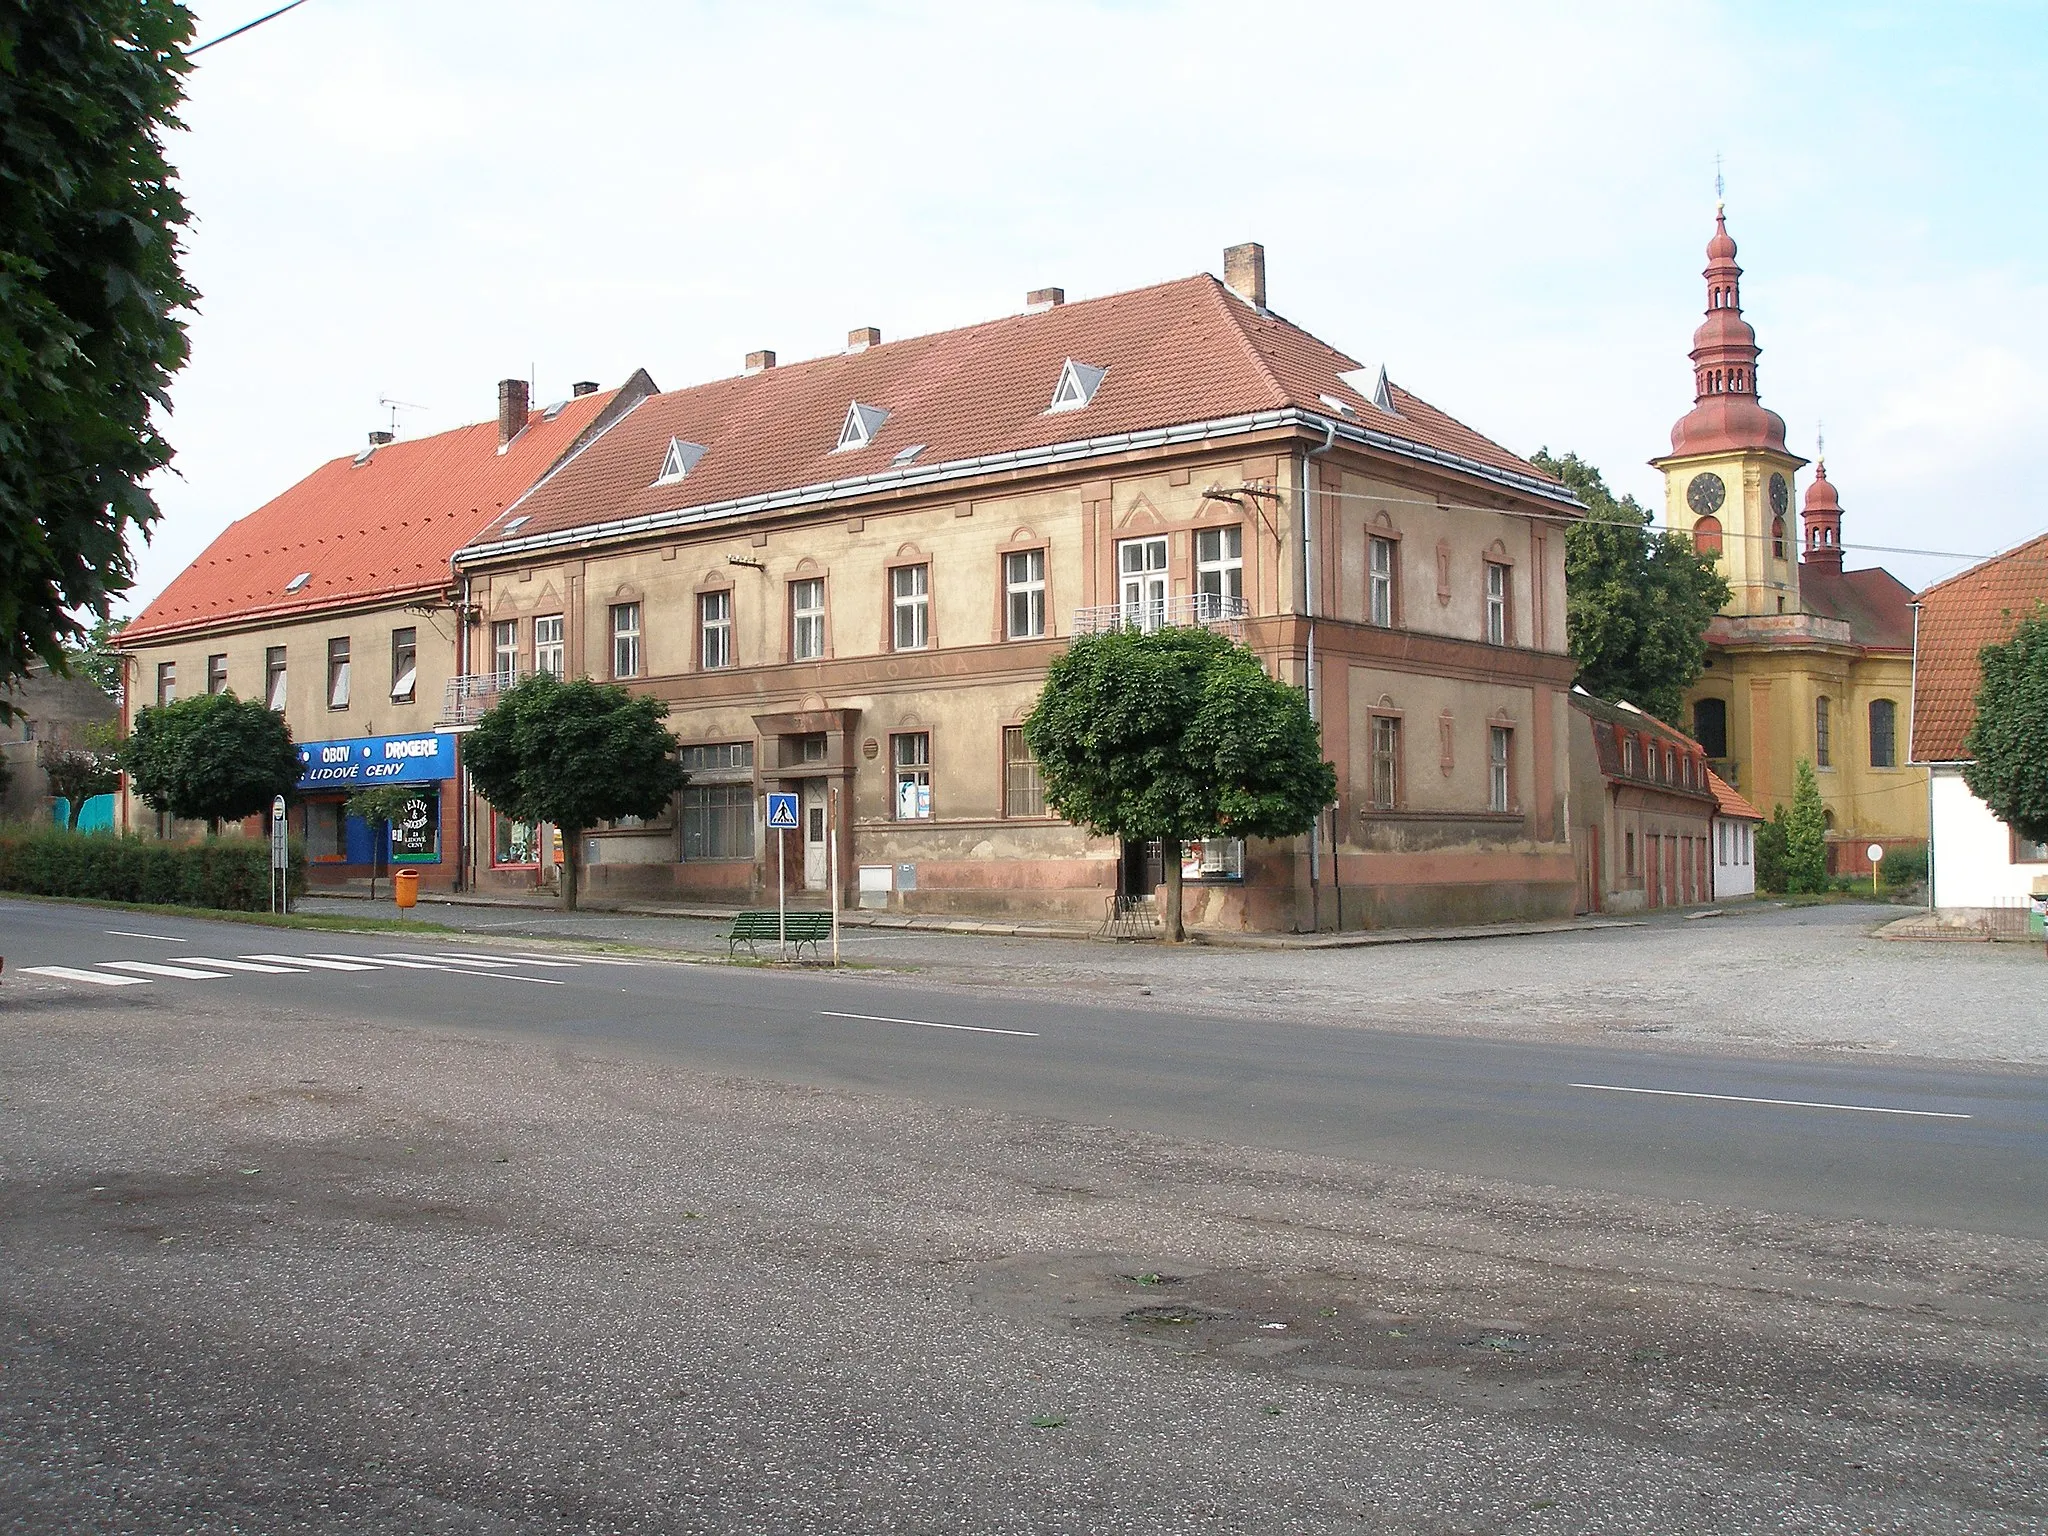 Photo showing: Main square in Kopidlno, Czech Republic.